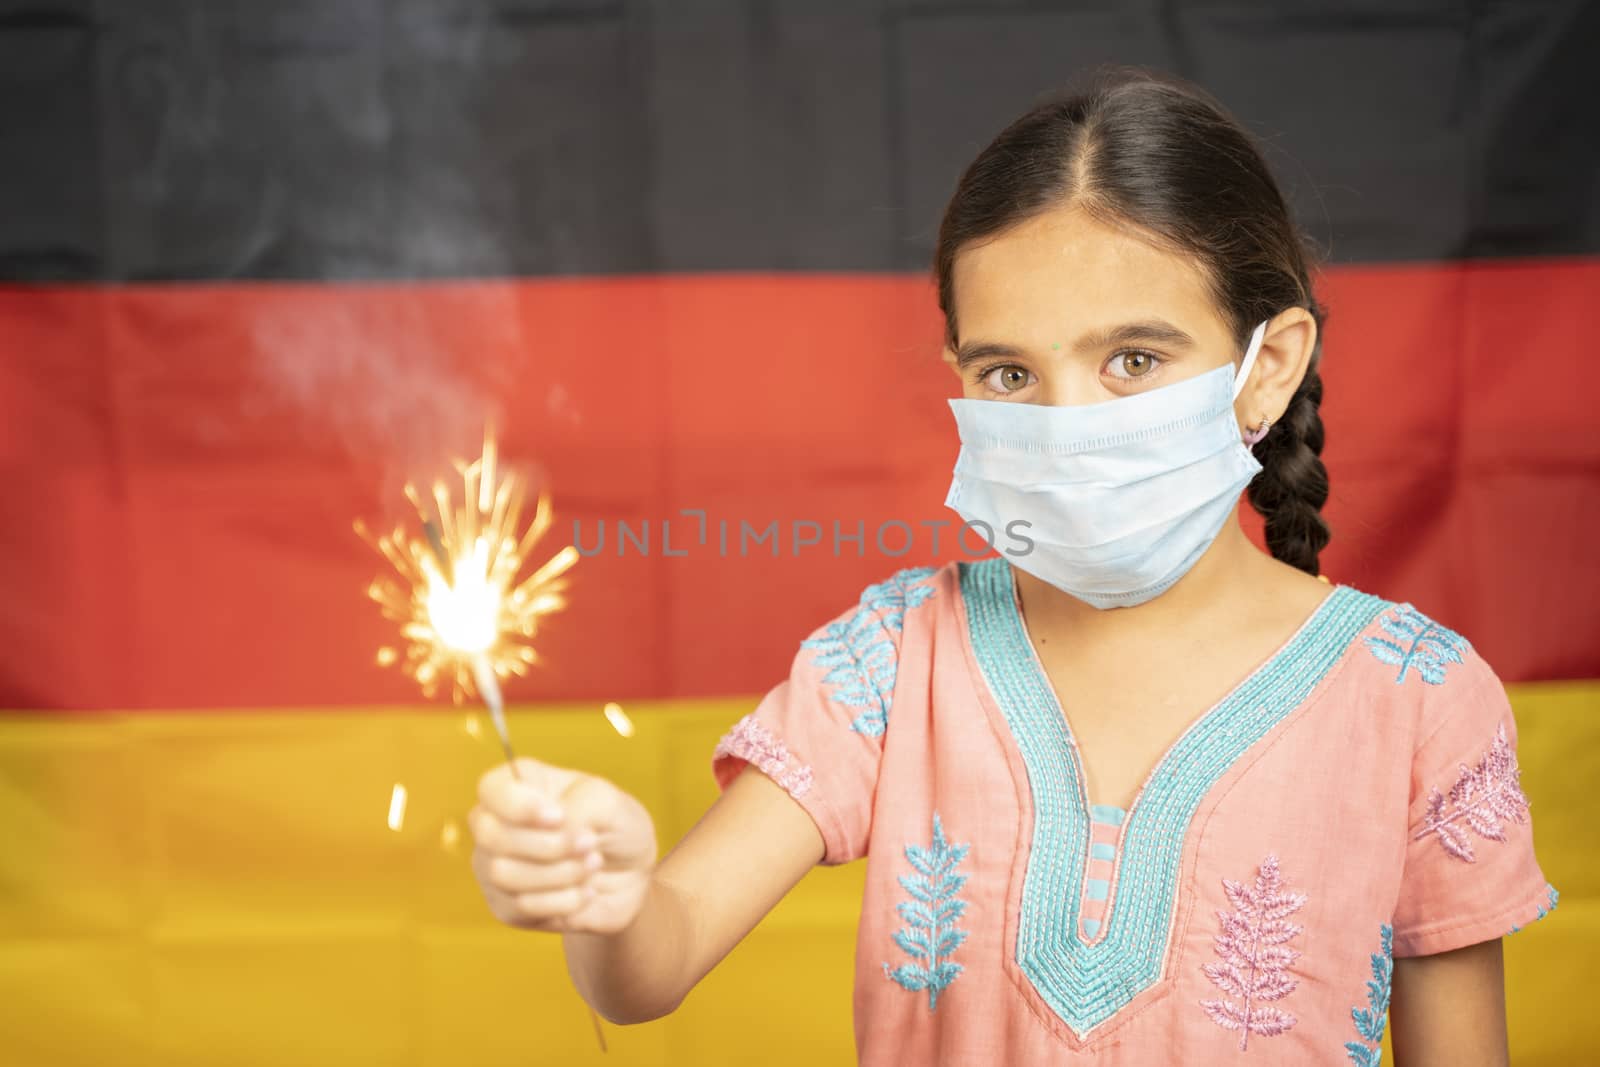 Young Girl Kid on medical mask holding Sparkler with german flag as background - concept showing Celebration of German Unity or Republic Day by lakshmiprasad.maski@gmai.com